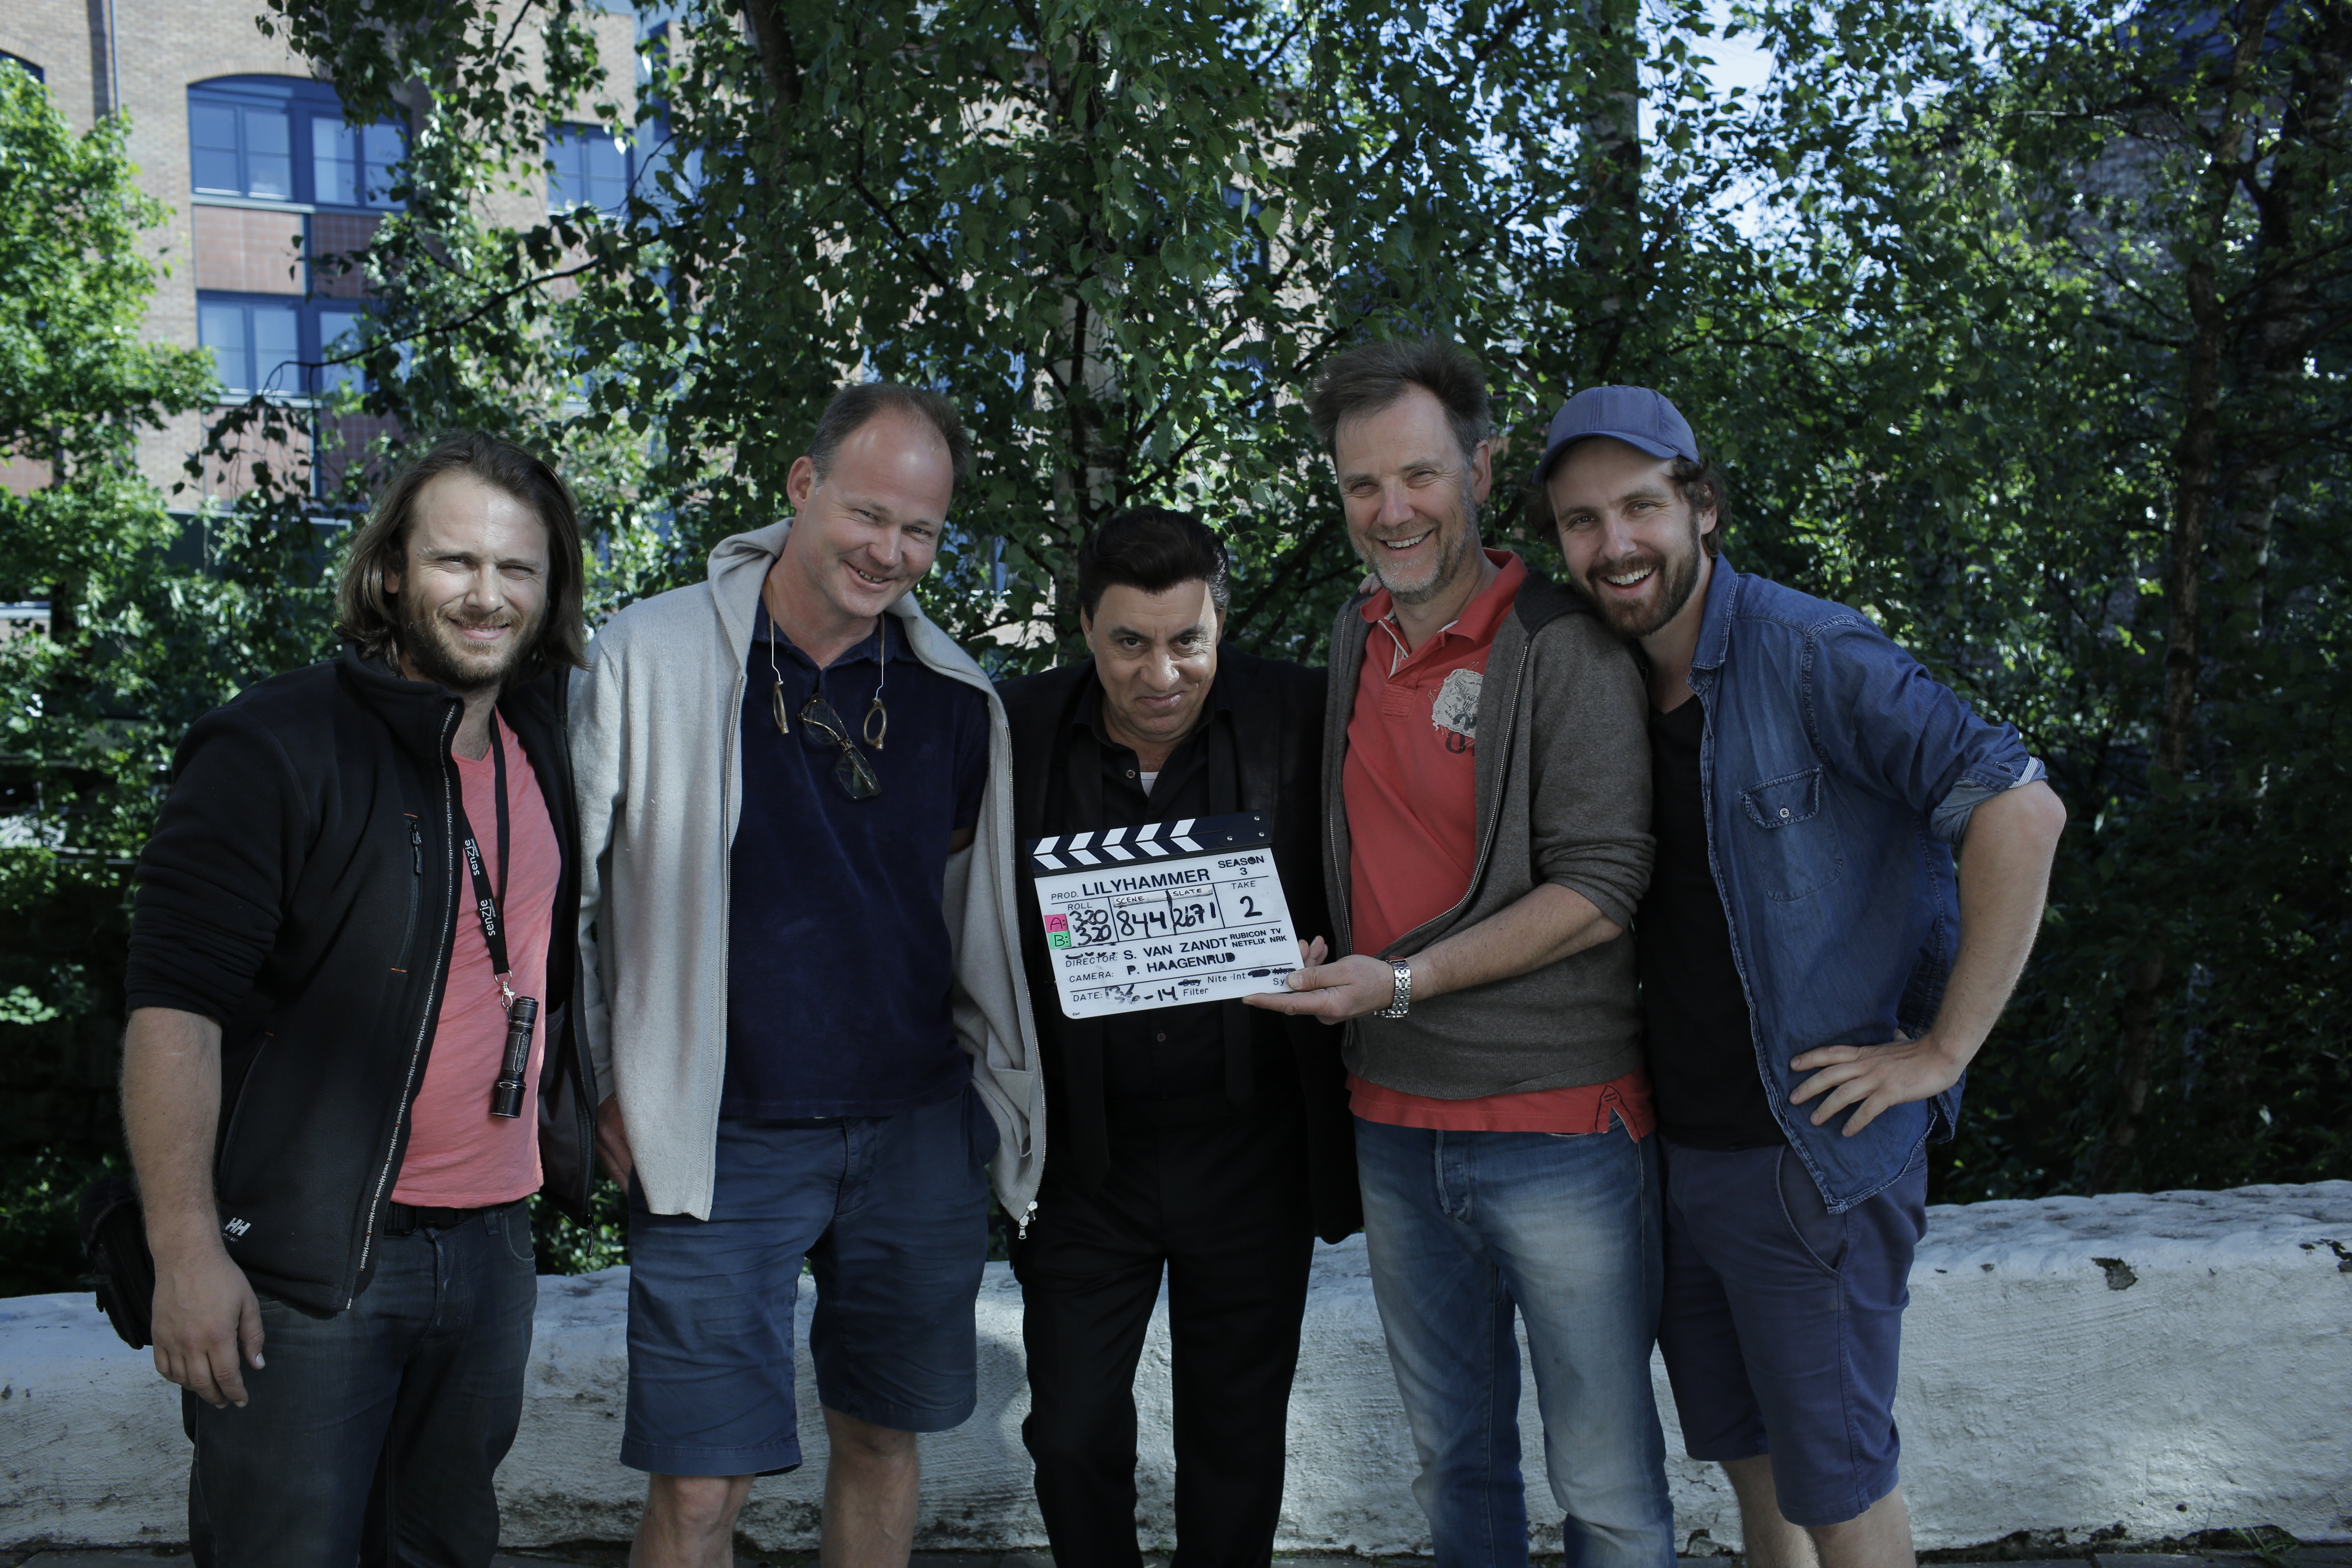 Lilyhammer Season 3. Wrap on Episode 8 with Director Steven Van Zandt. Camera crew from left Philip Borgli, Anders Legaard, Pål Buggge Haagenrud and Håvar Karlsen